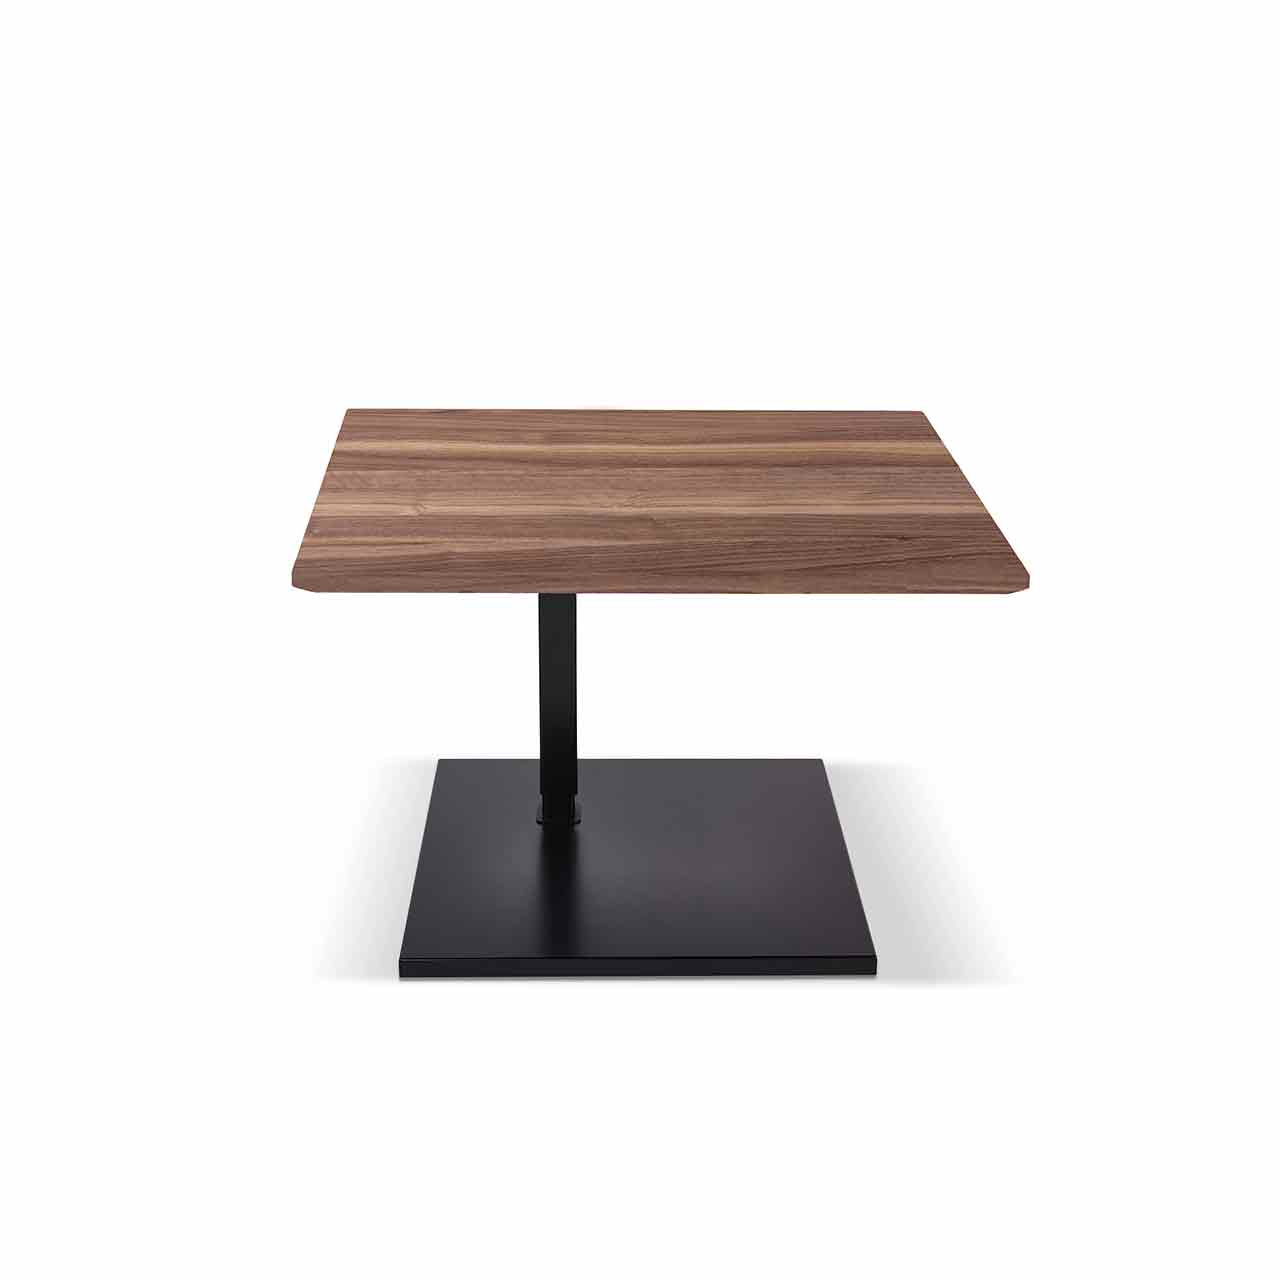 Ronald Schmitt – Beistelltisch Kolo K 726 - unten | Tischplatte Massivholz Nussbaum, Sockel schwarz 